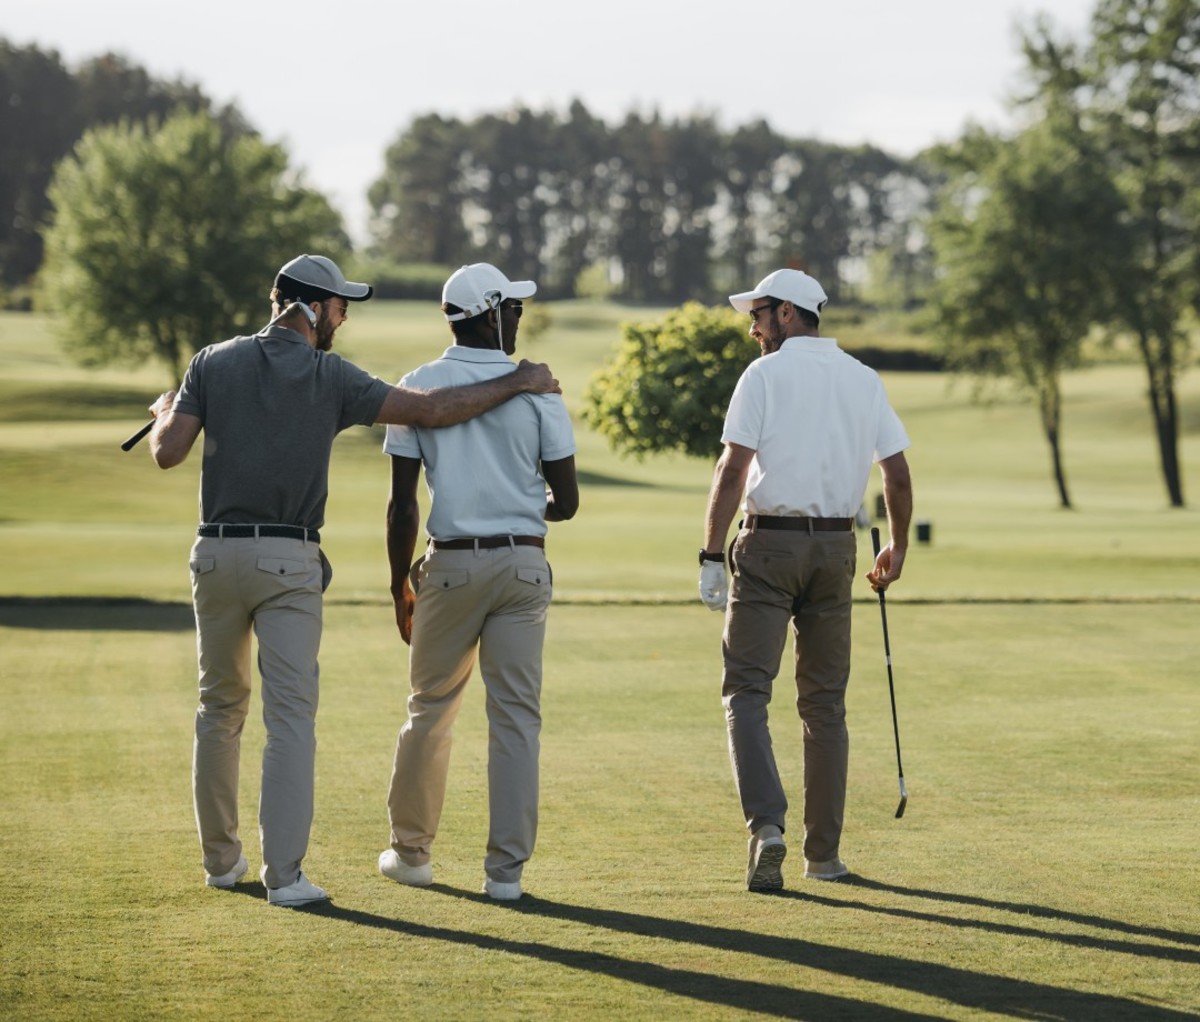 Three male golfers walking on golf course